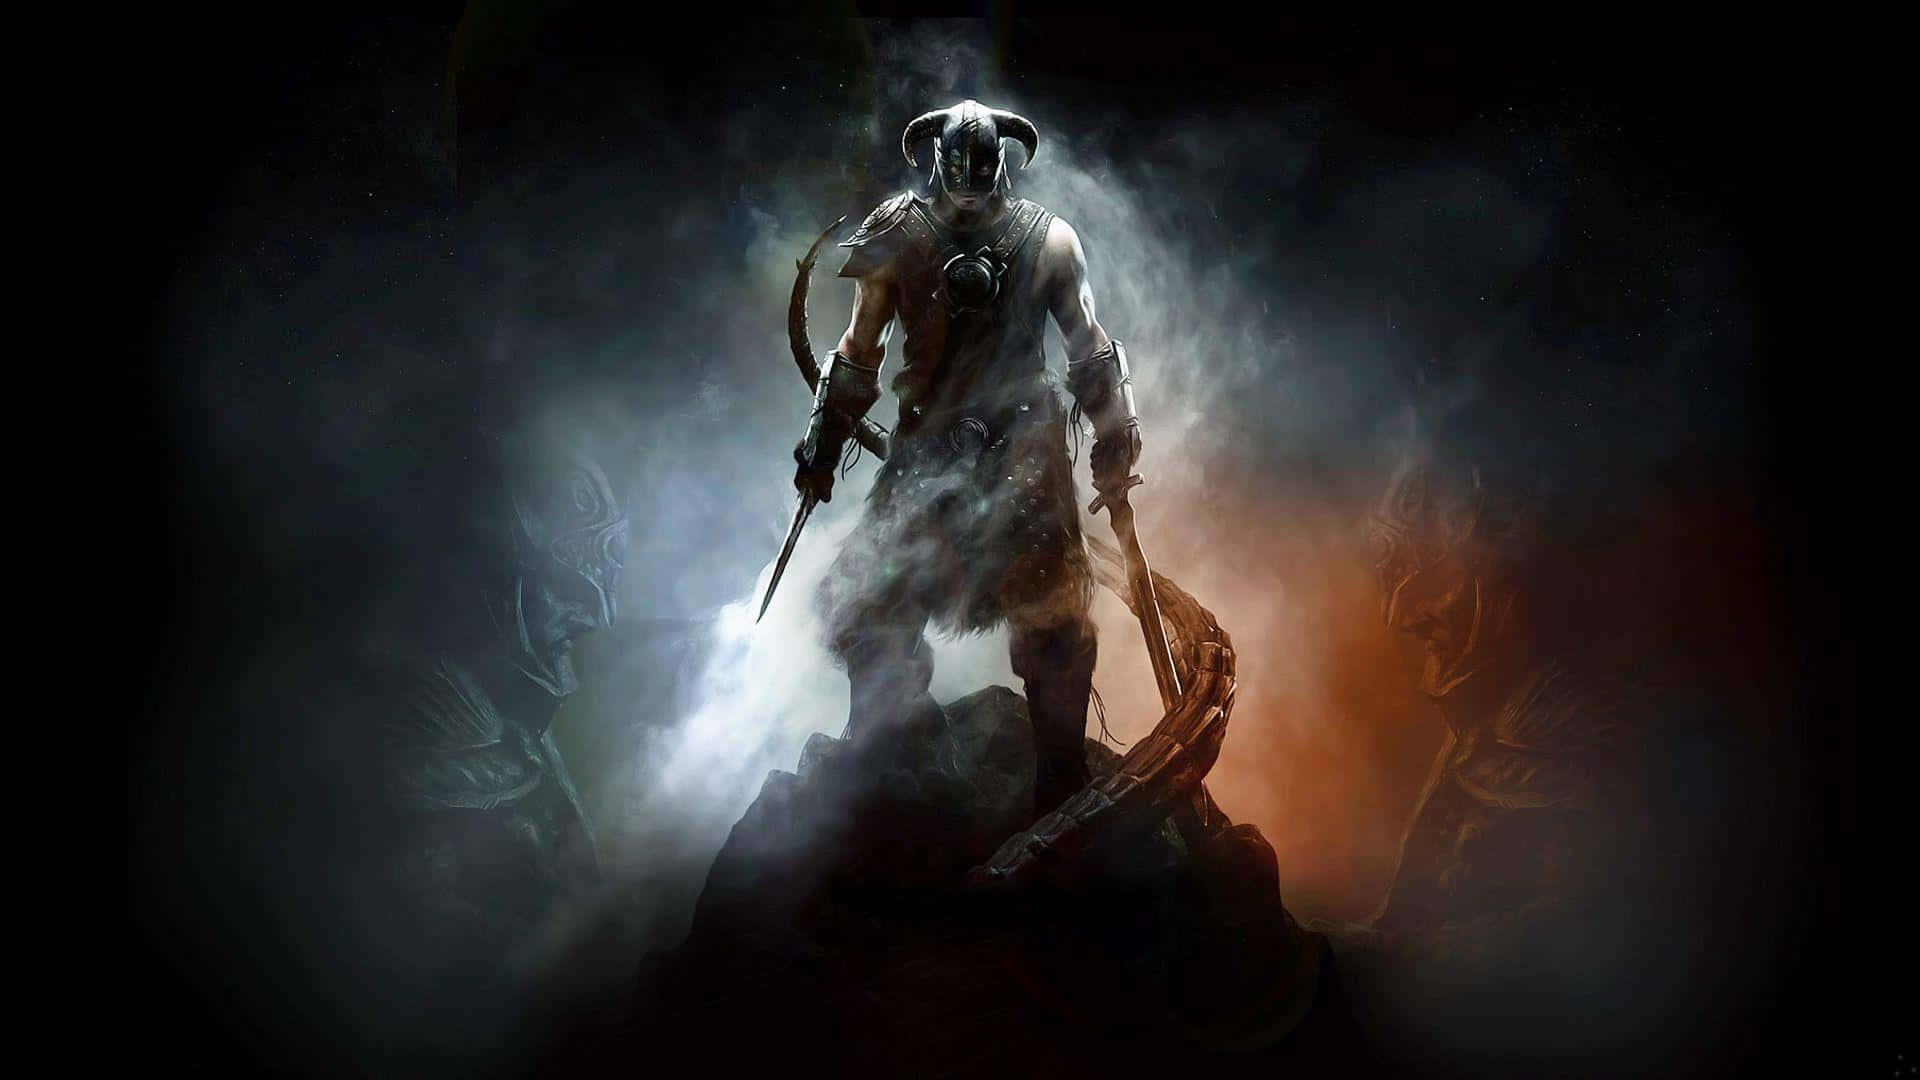 The Elder Scrolls V: Skyrim - A Warrior's Journey